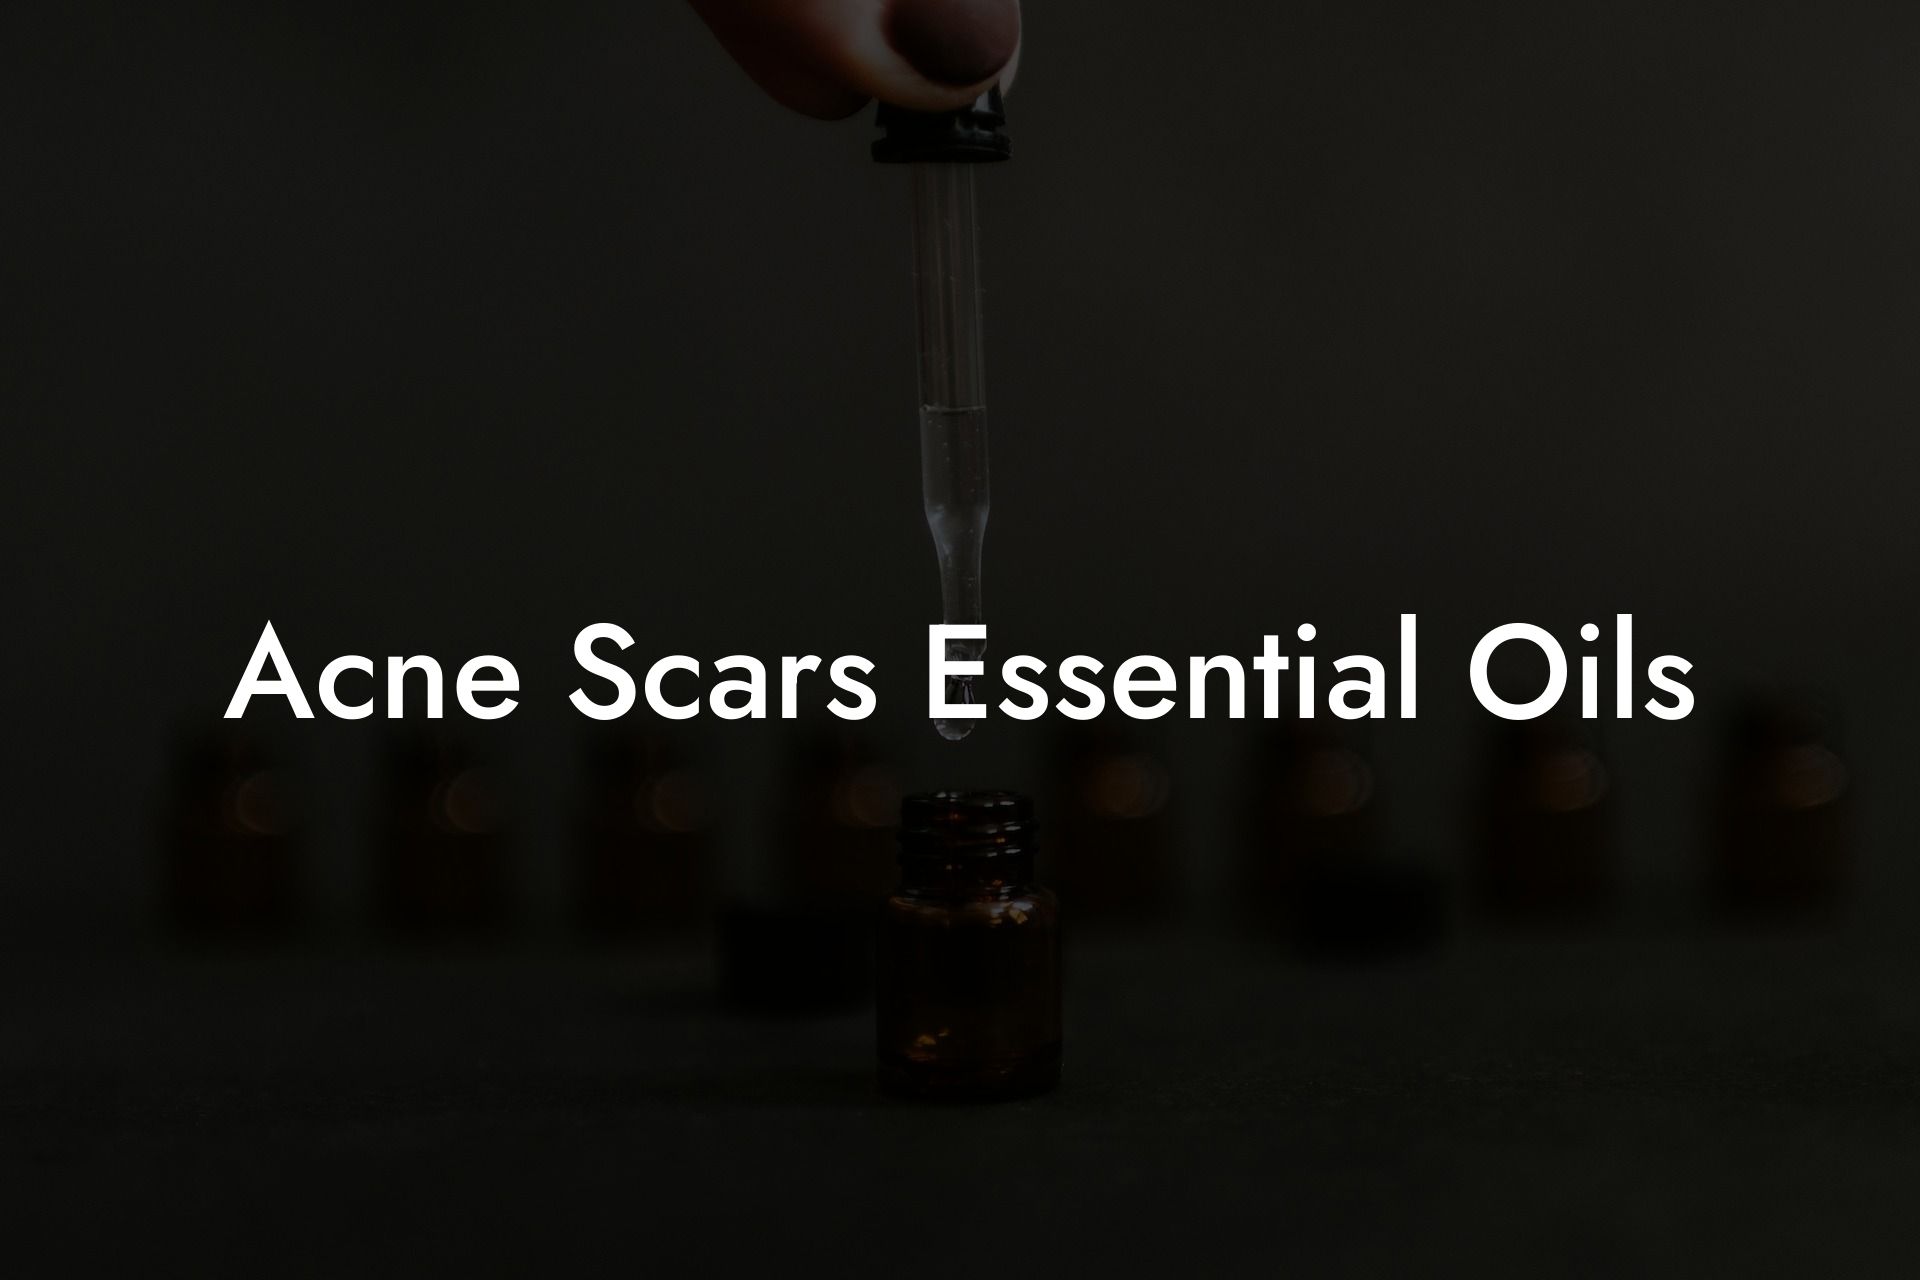 Acne Scars Essential Oils